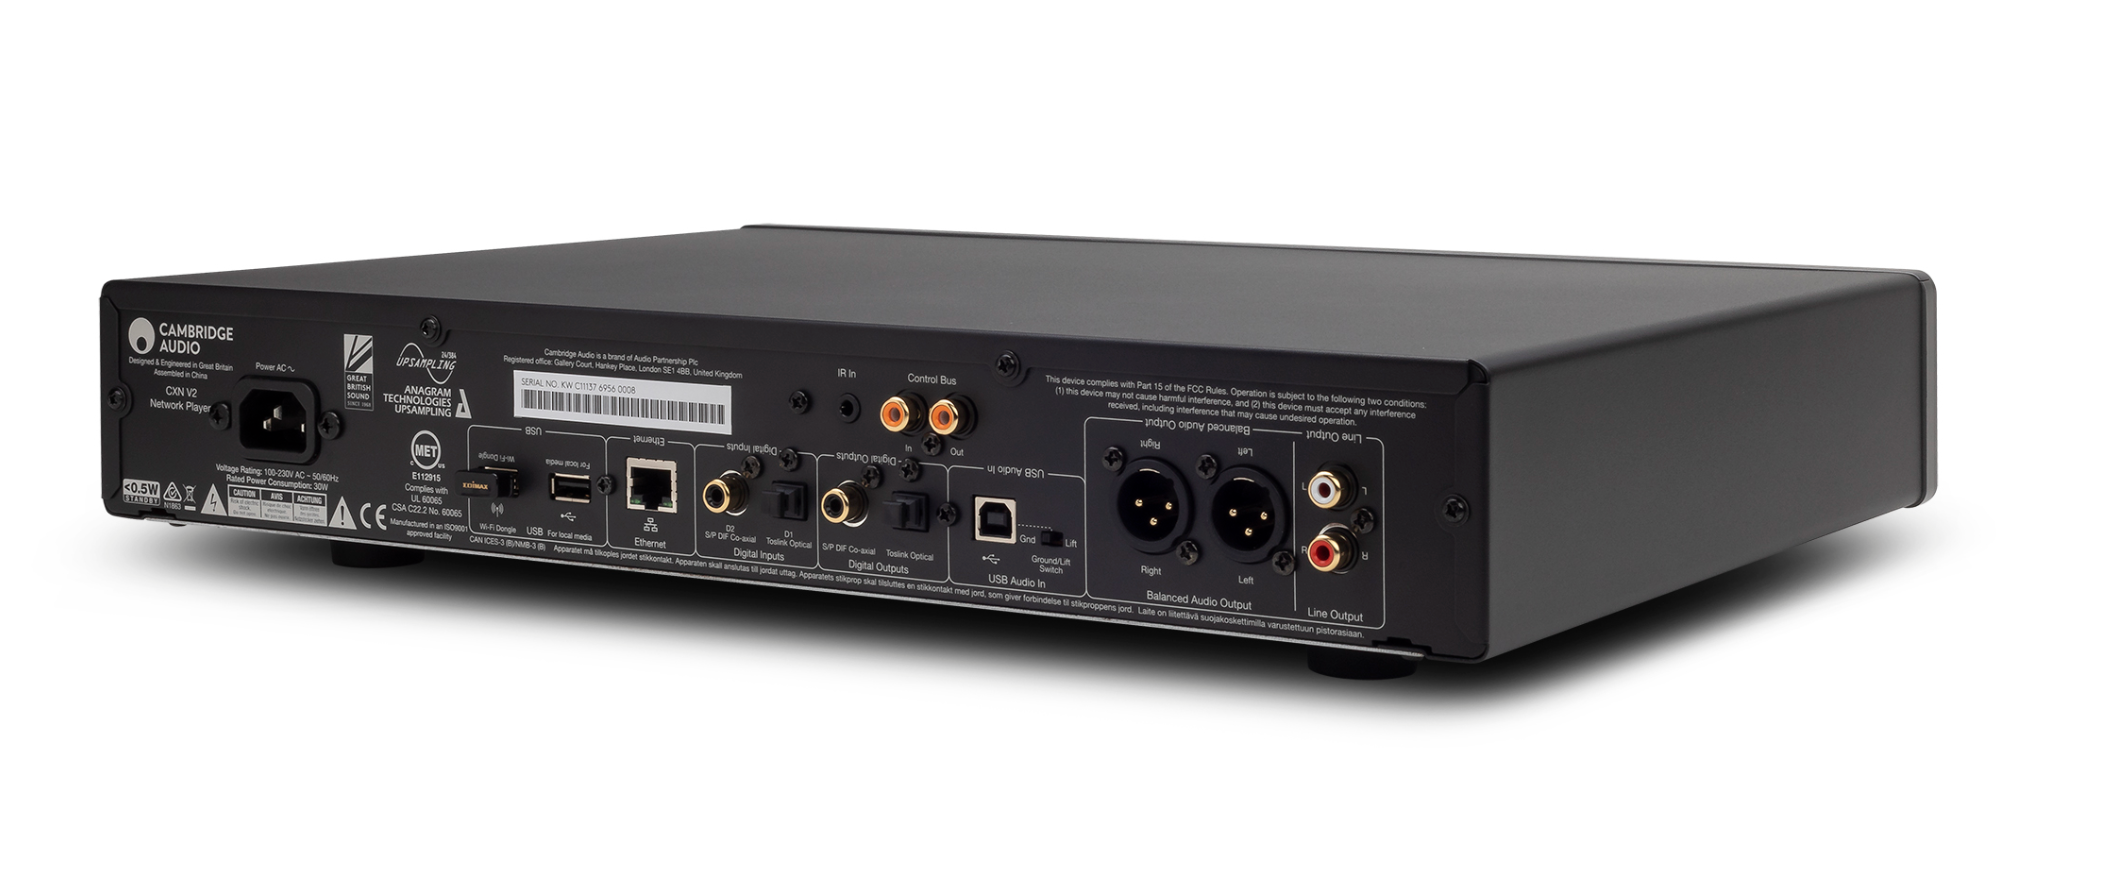 Network Player CXN V2 Cambridge Audio